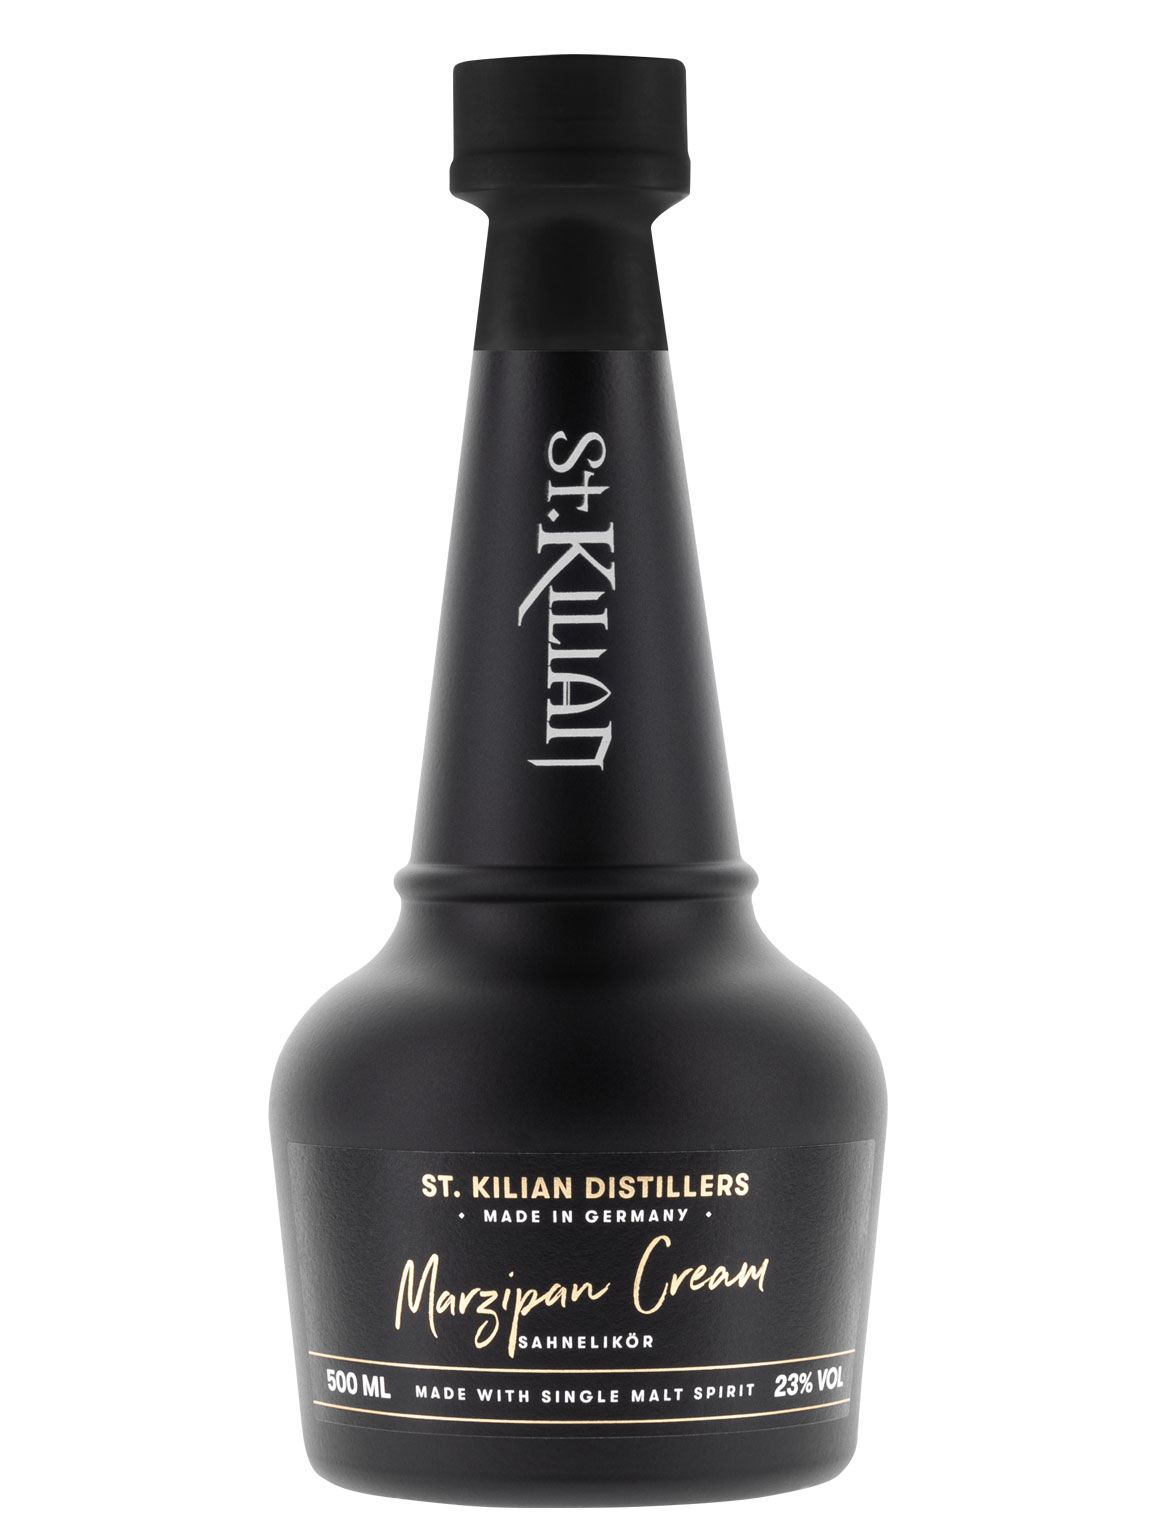 MARZIPAN-CREAM - Cream liqueur, malt Kilian 🥃 whisky - Germany St. Single from 0.5l Distillers